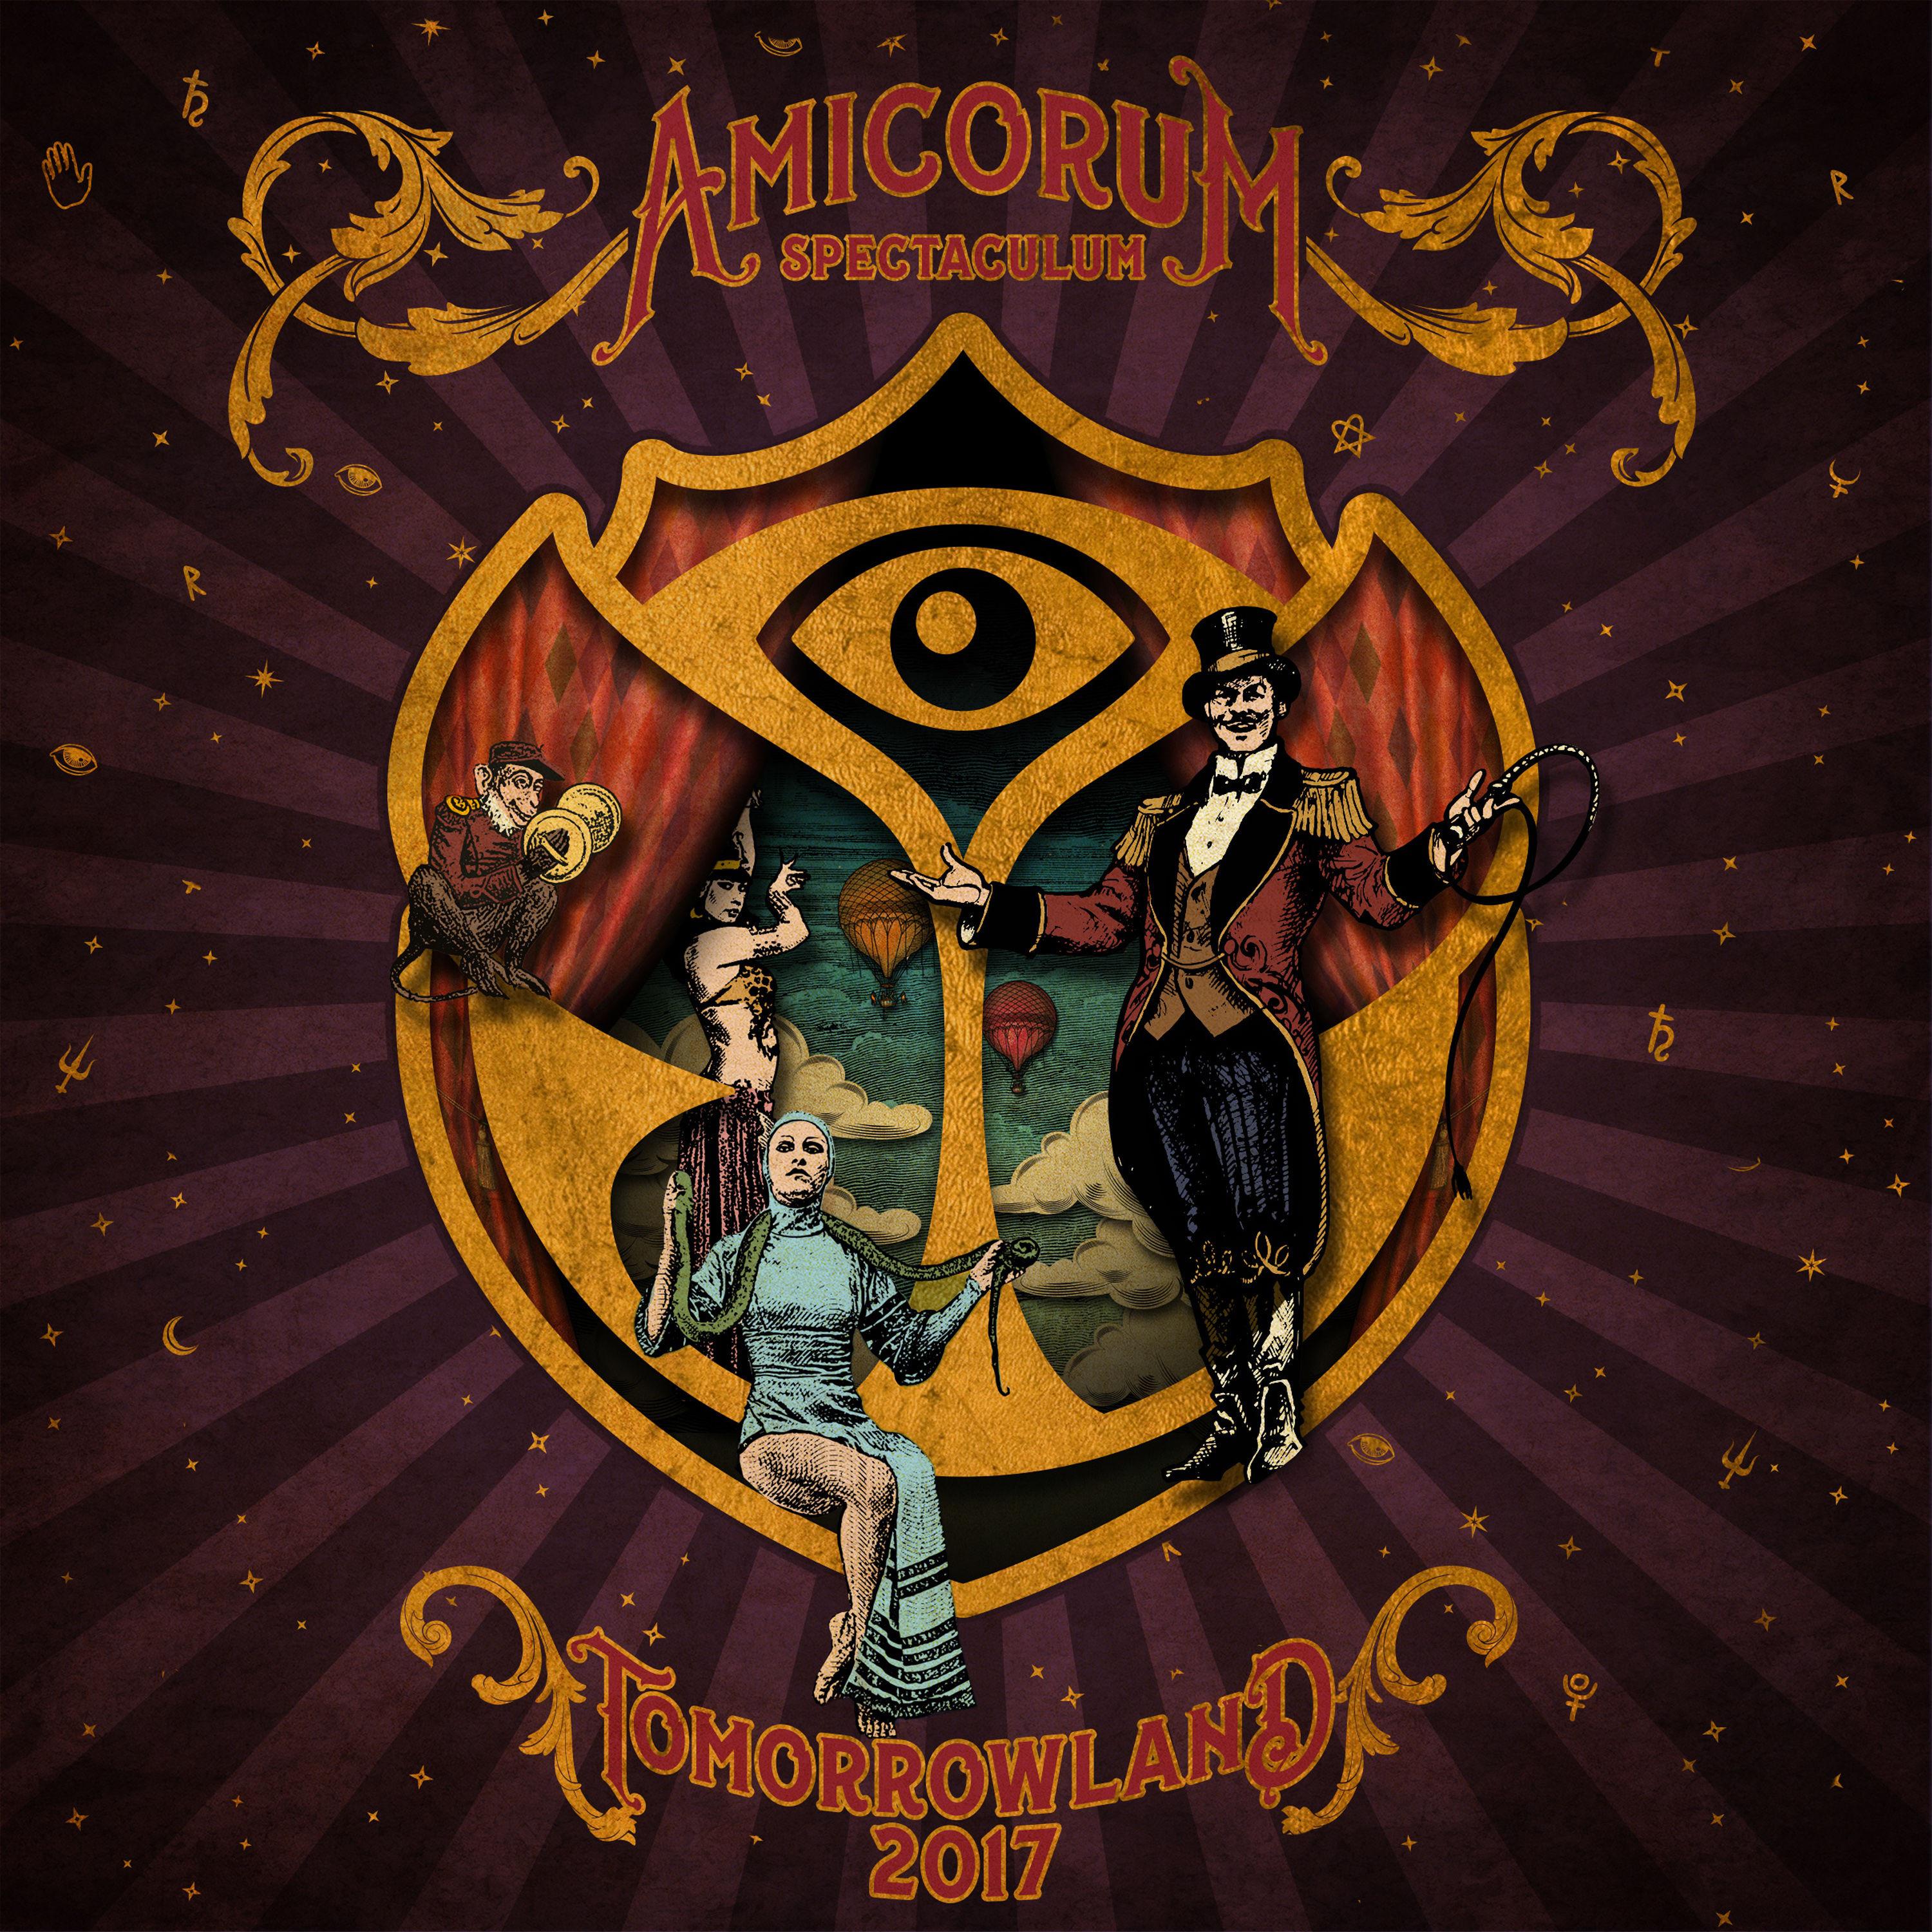 Tomorrowland 2017: Amicorum Spectaculum (Armin van Buuren Continuous Mix)